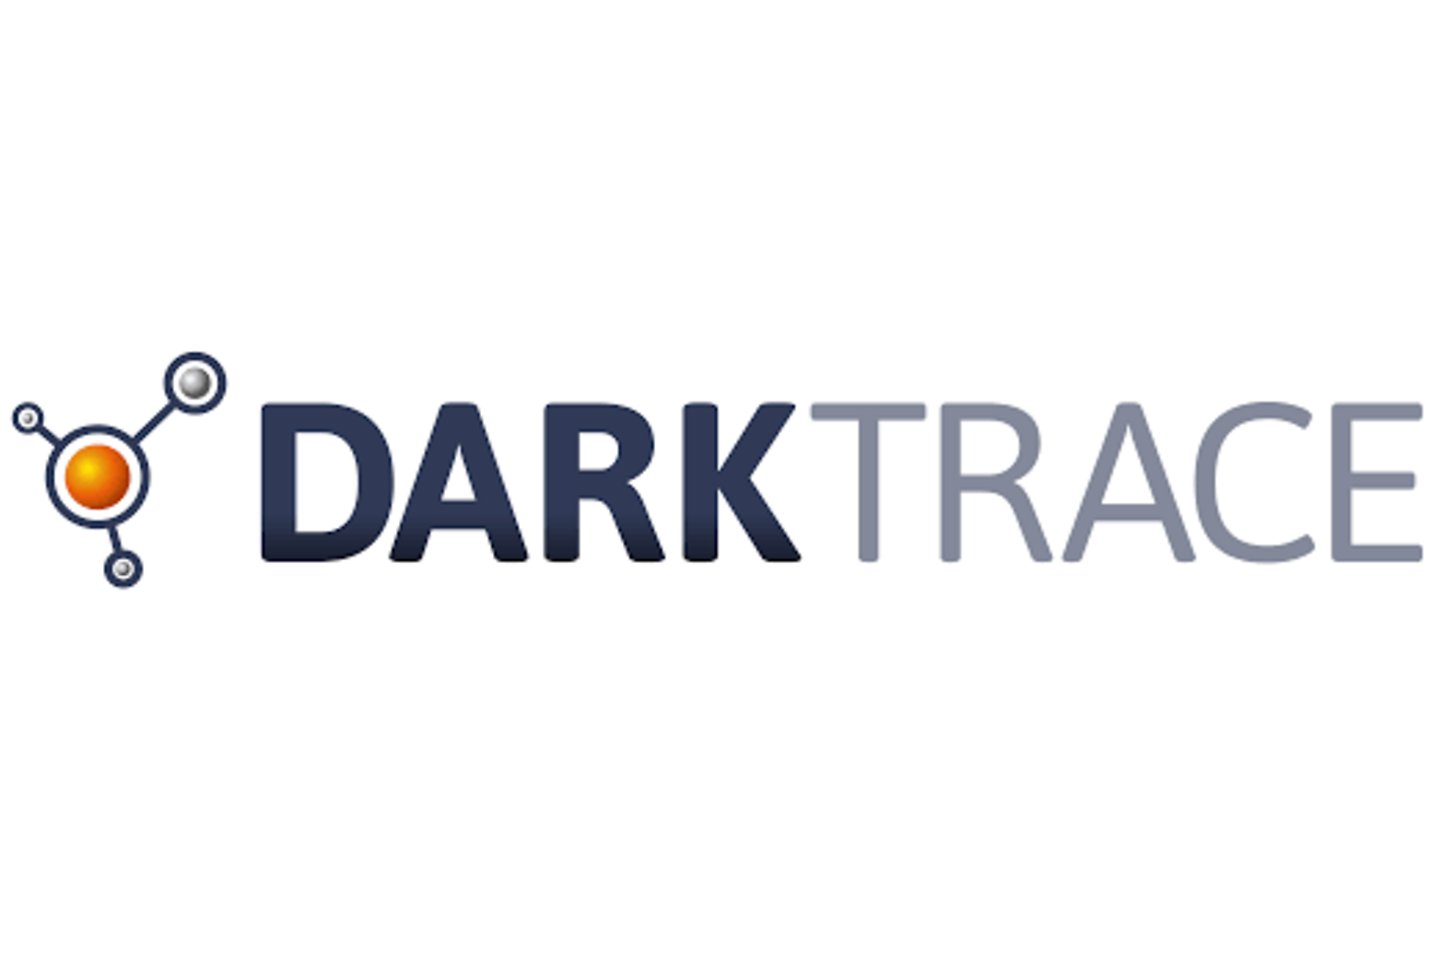 Darktrace logo beneath it